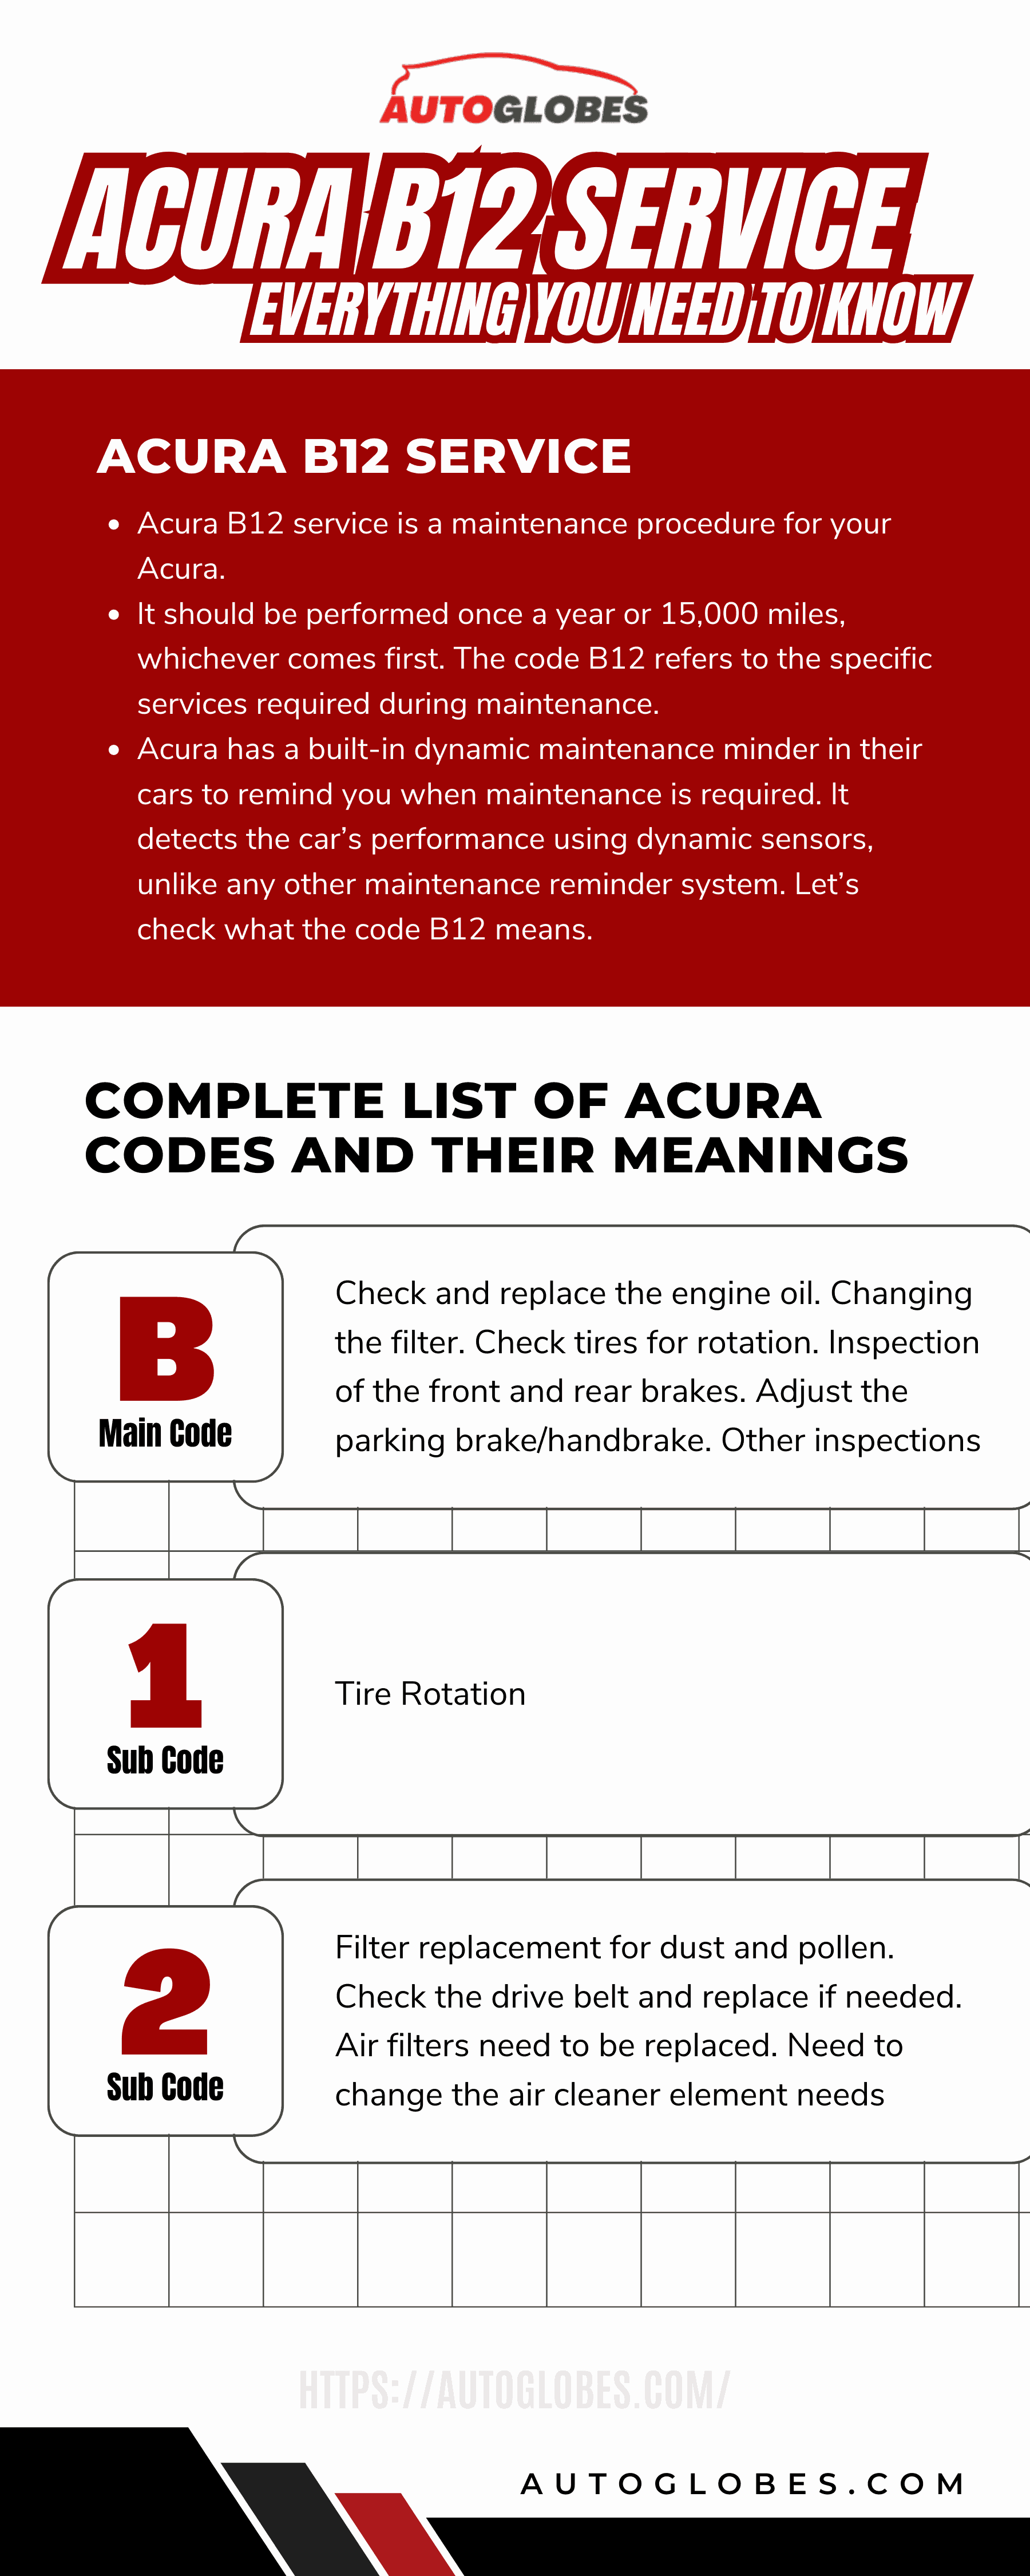 Acura B12 Service Infographic